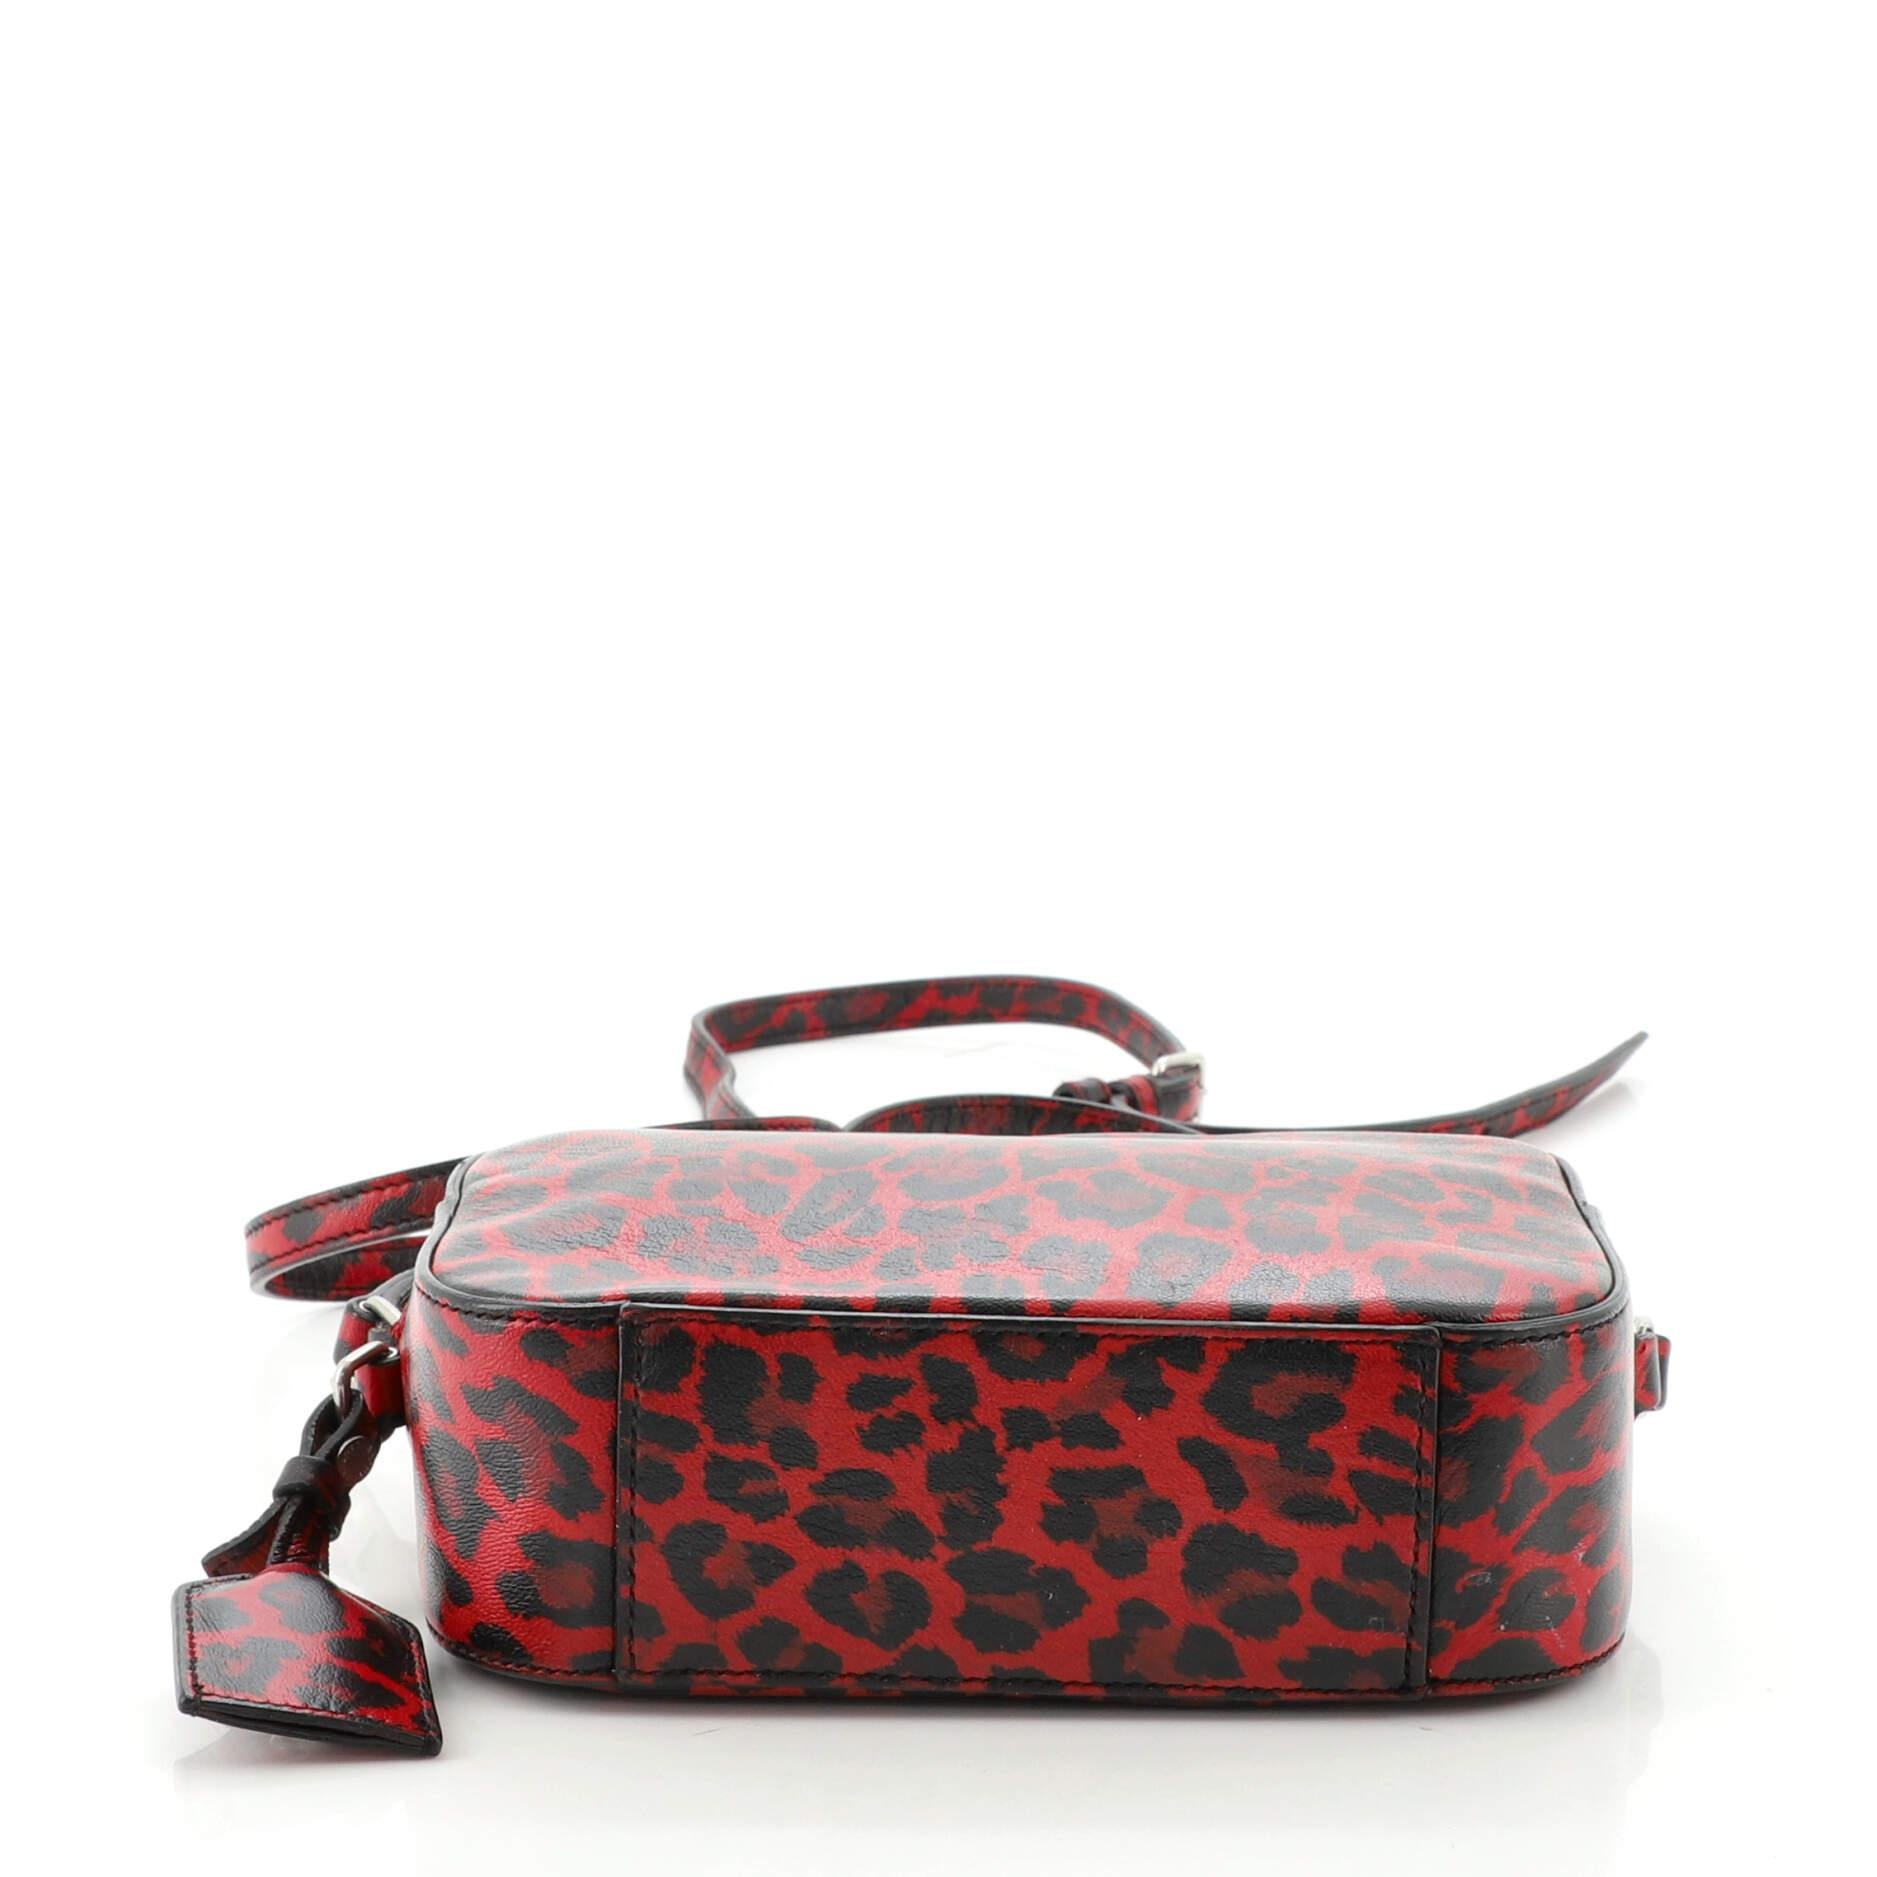 ysl leopard camera bag